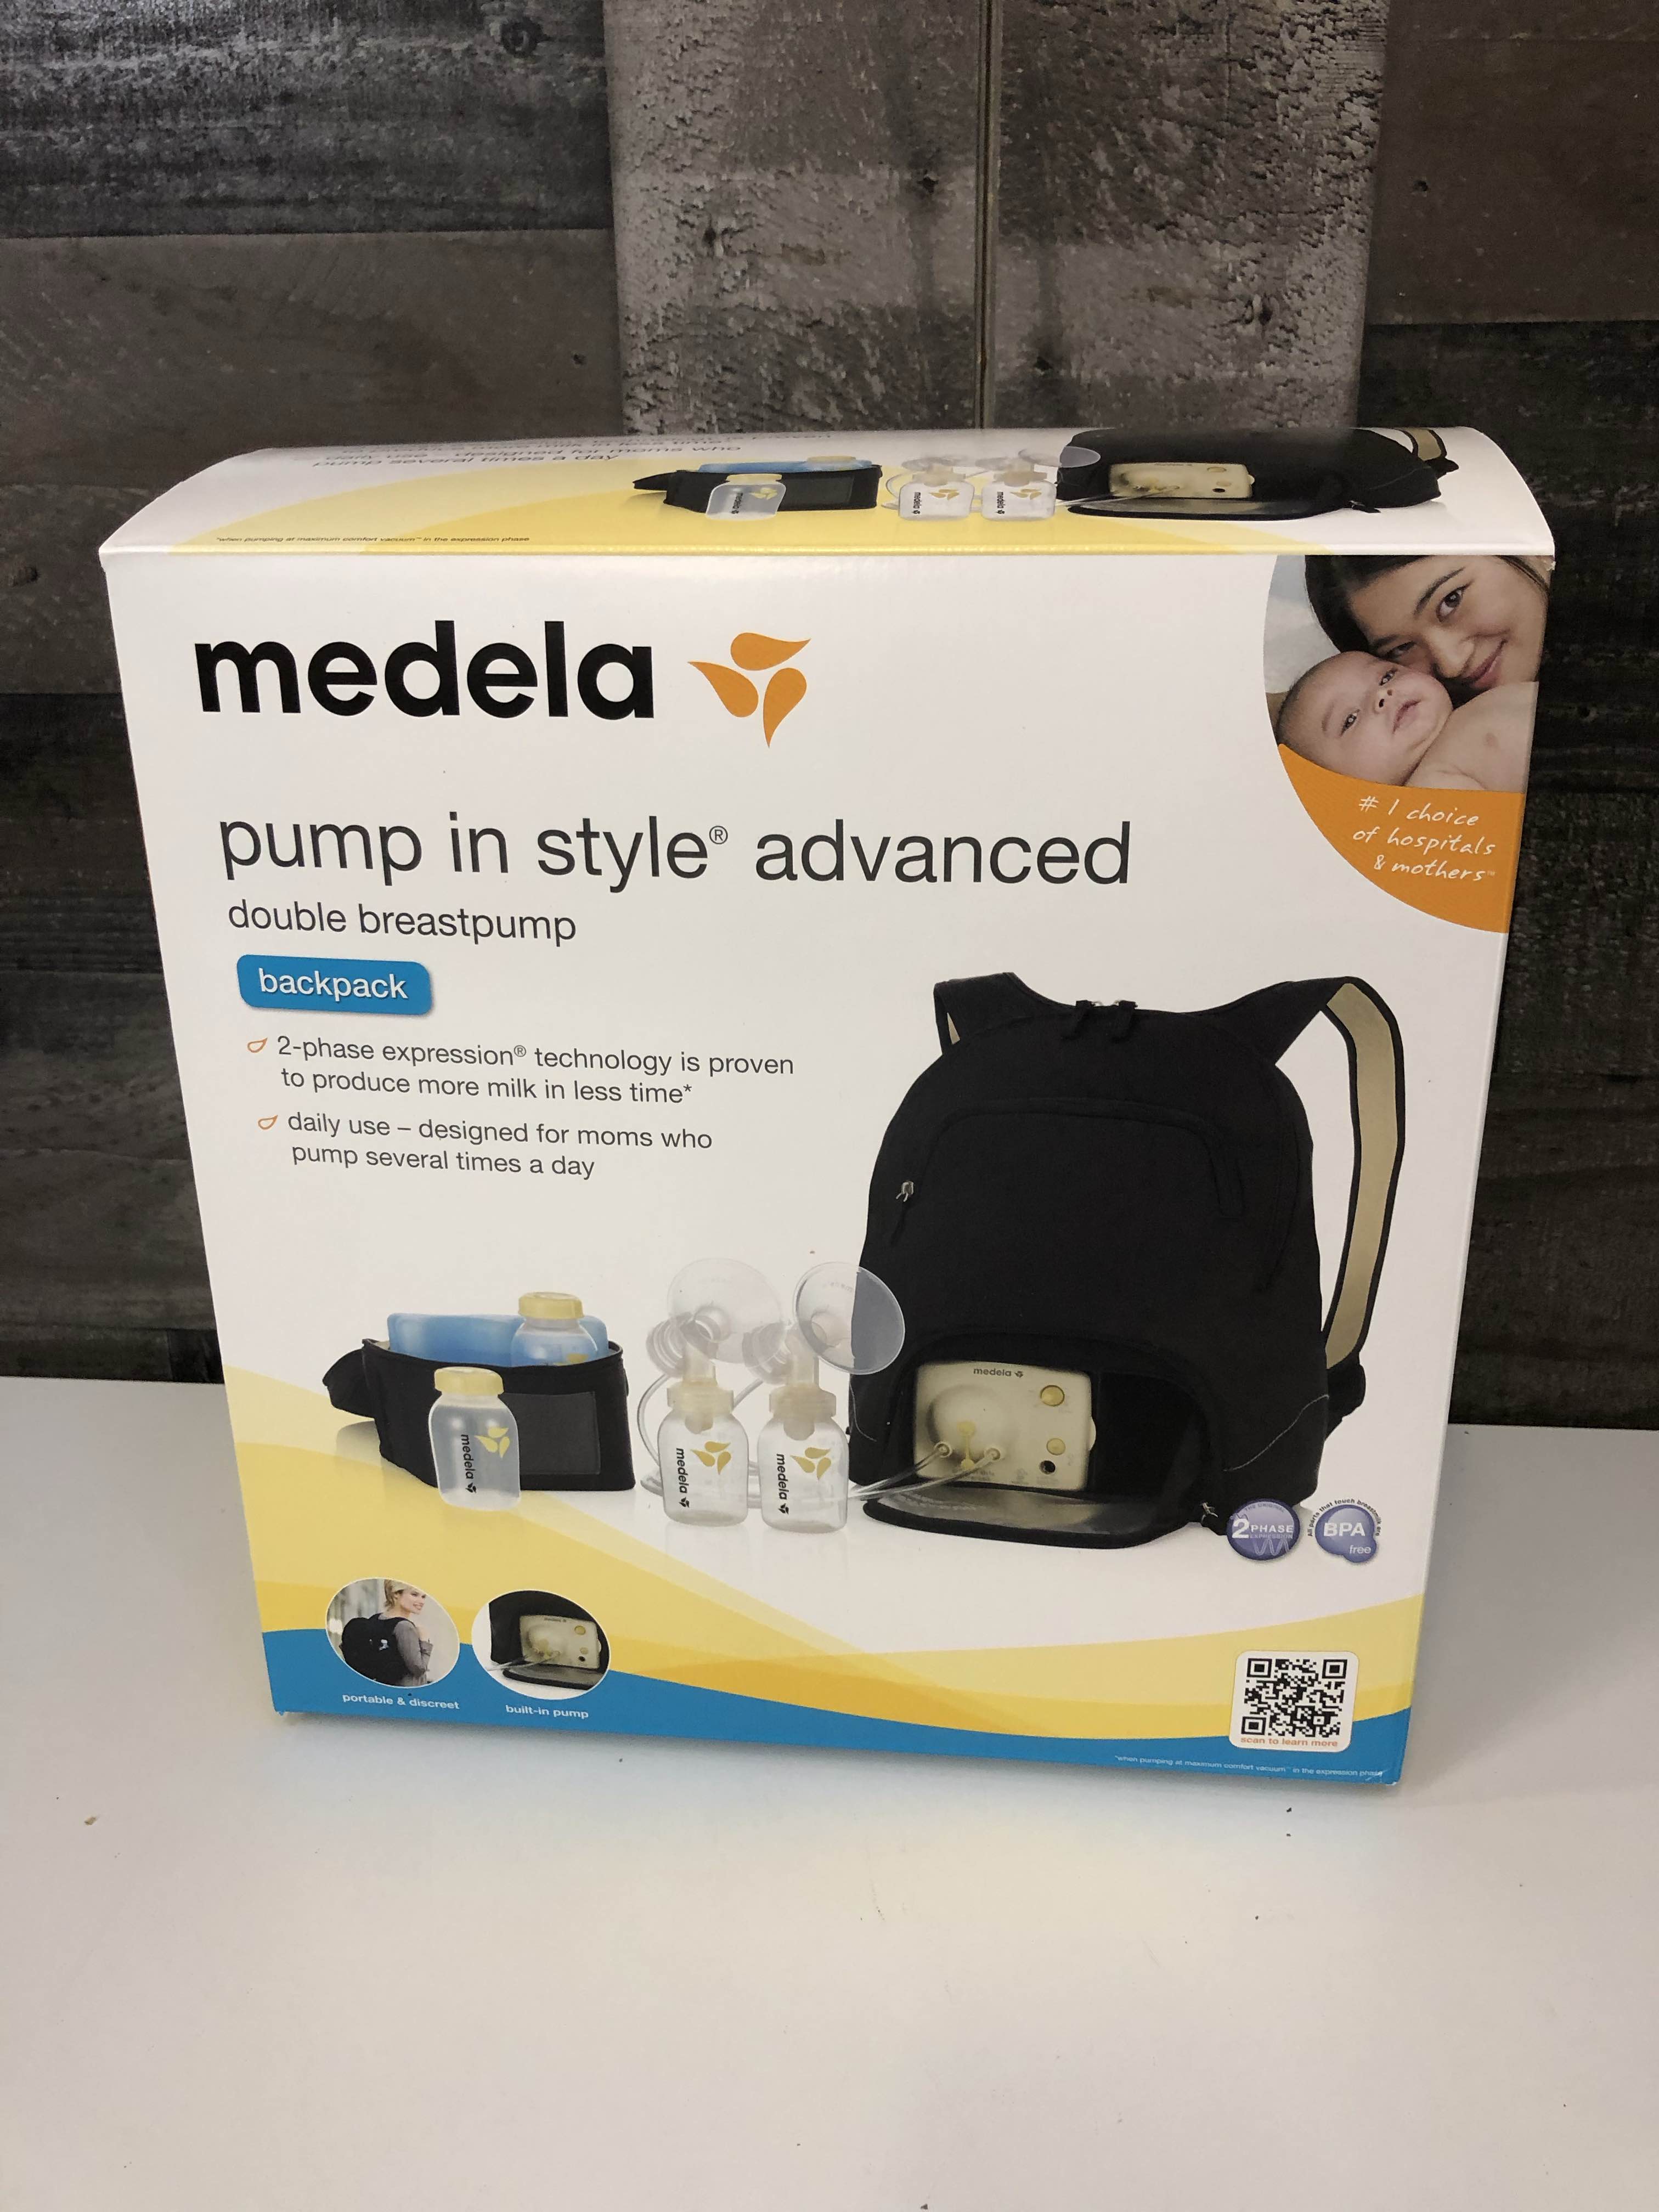 medela pump in style box